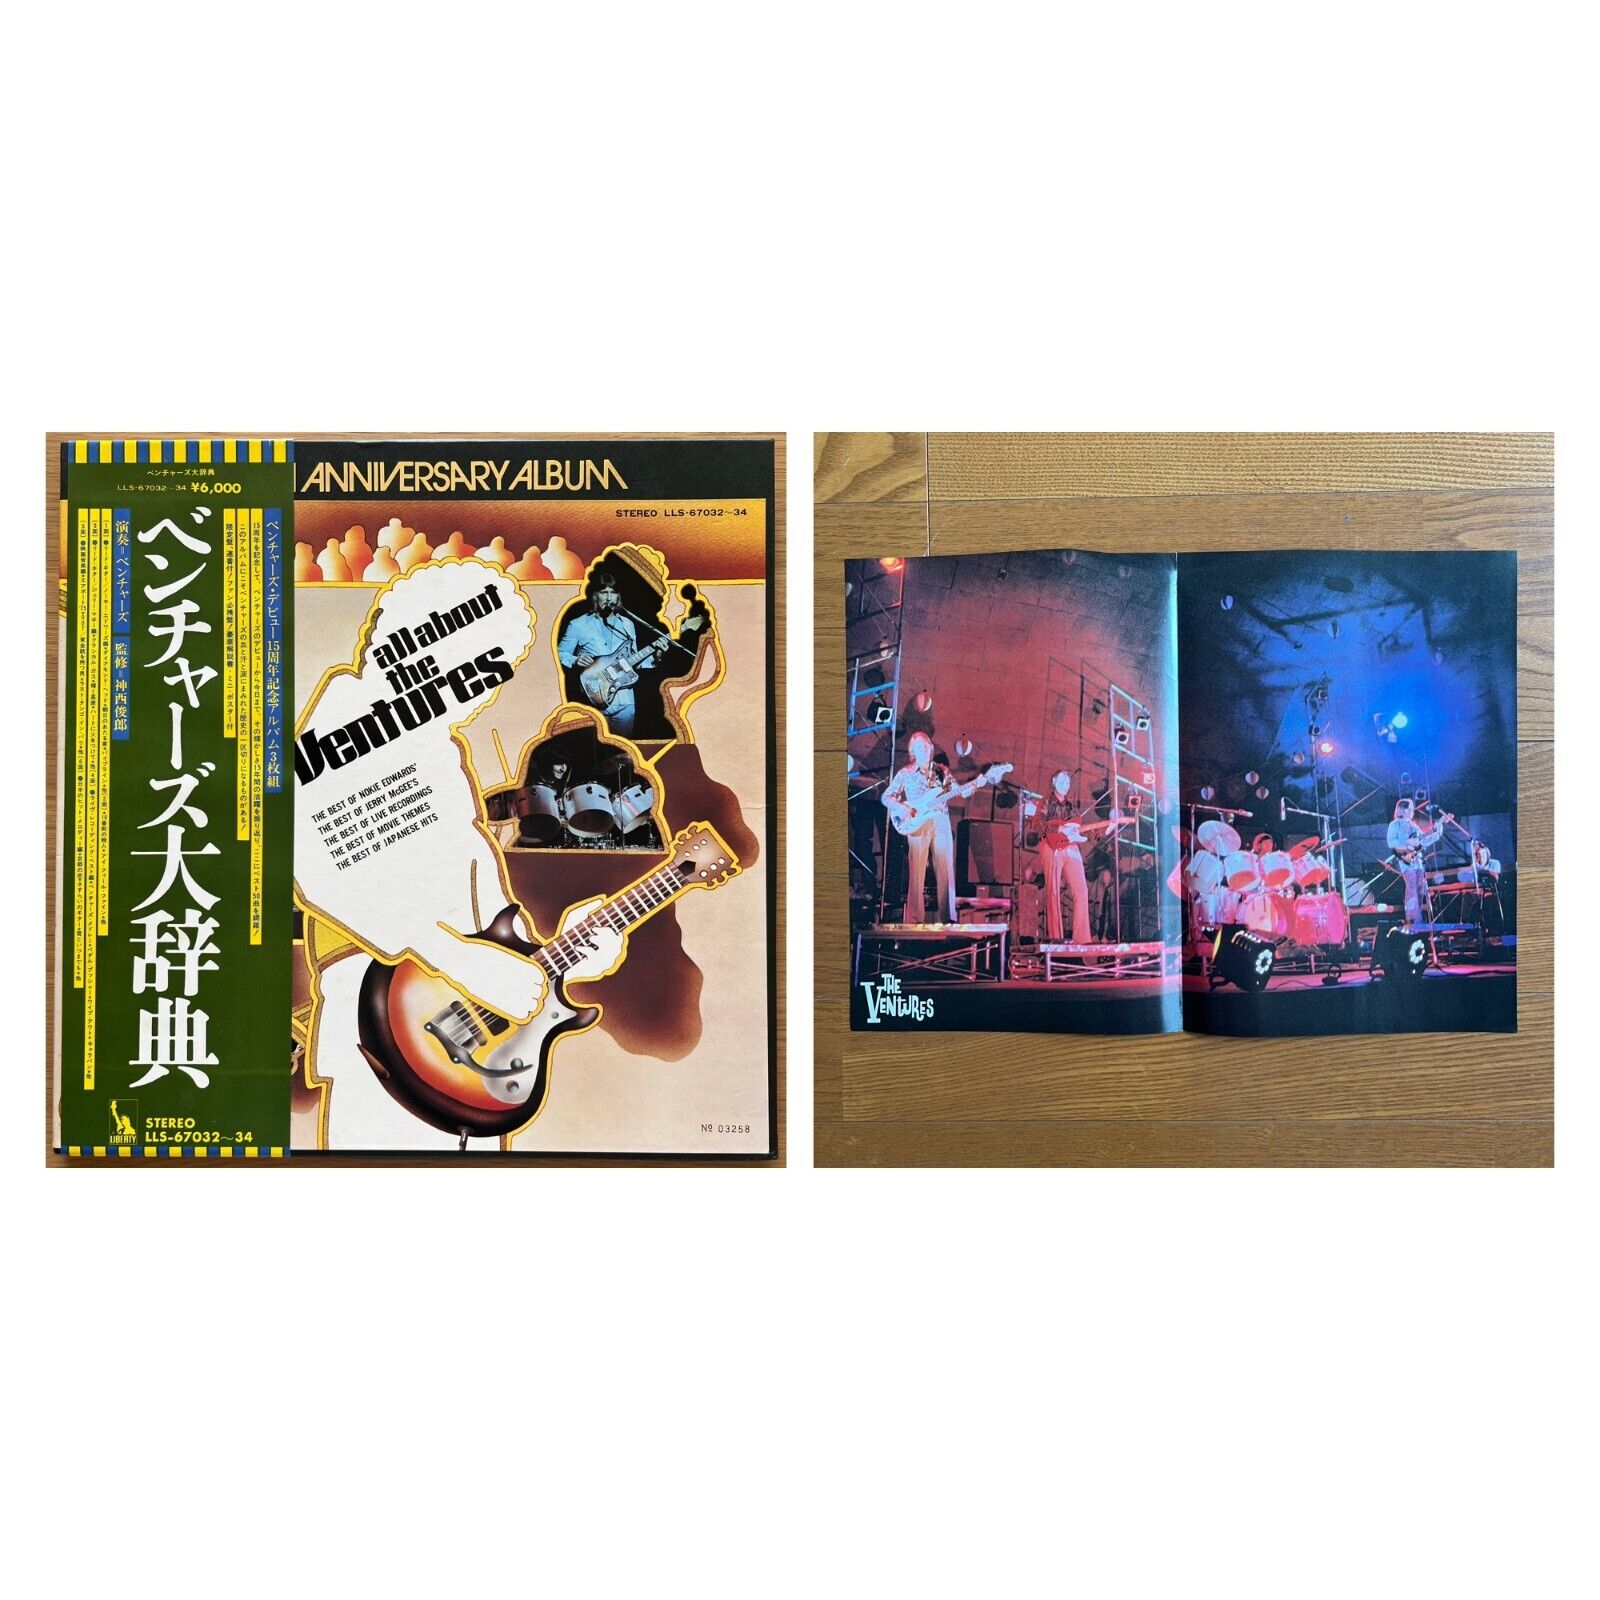 VENTURES The 15th Anniversary Album JAPAN 3 LP BOX W/OBI & POSTER LLS-67032-34